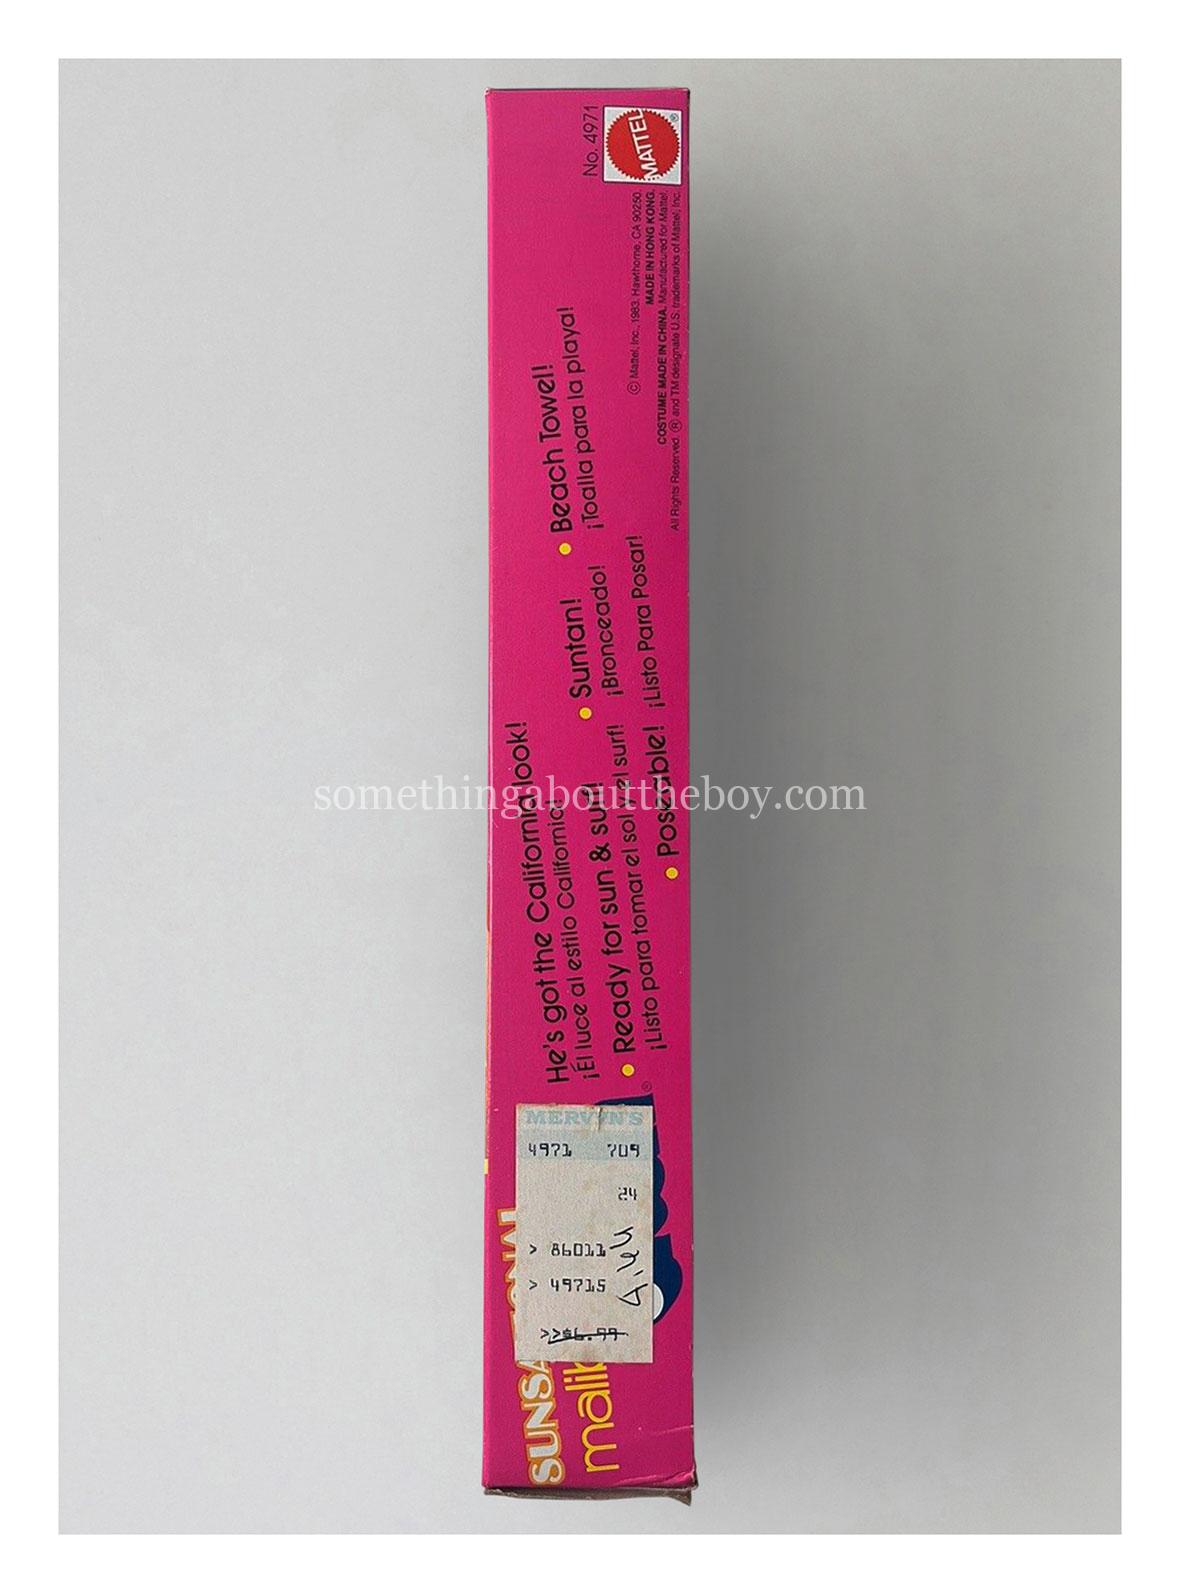 1984 #4971 Sunsational Malibu Ken in original packaging